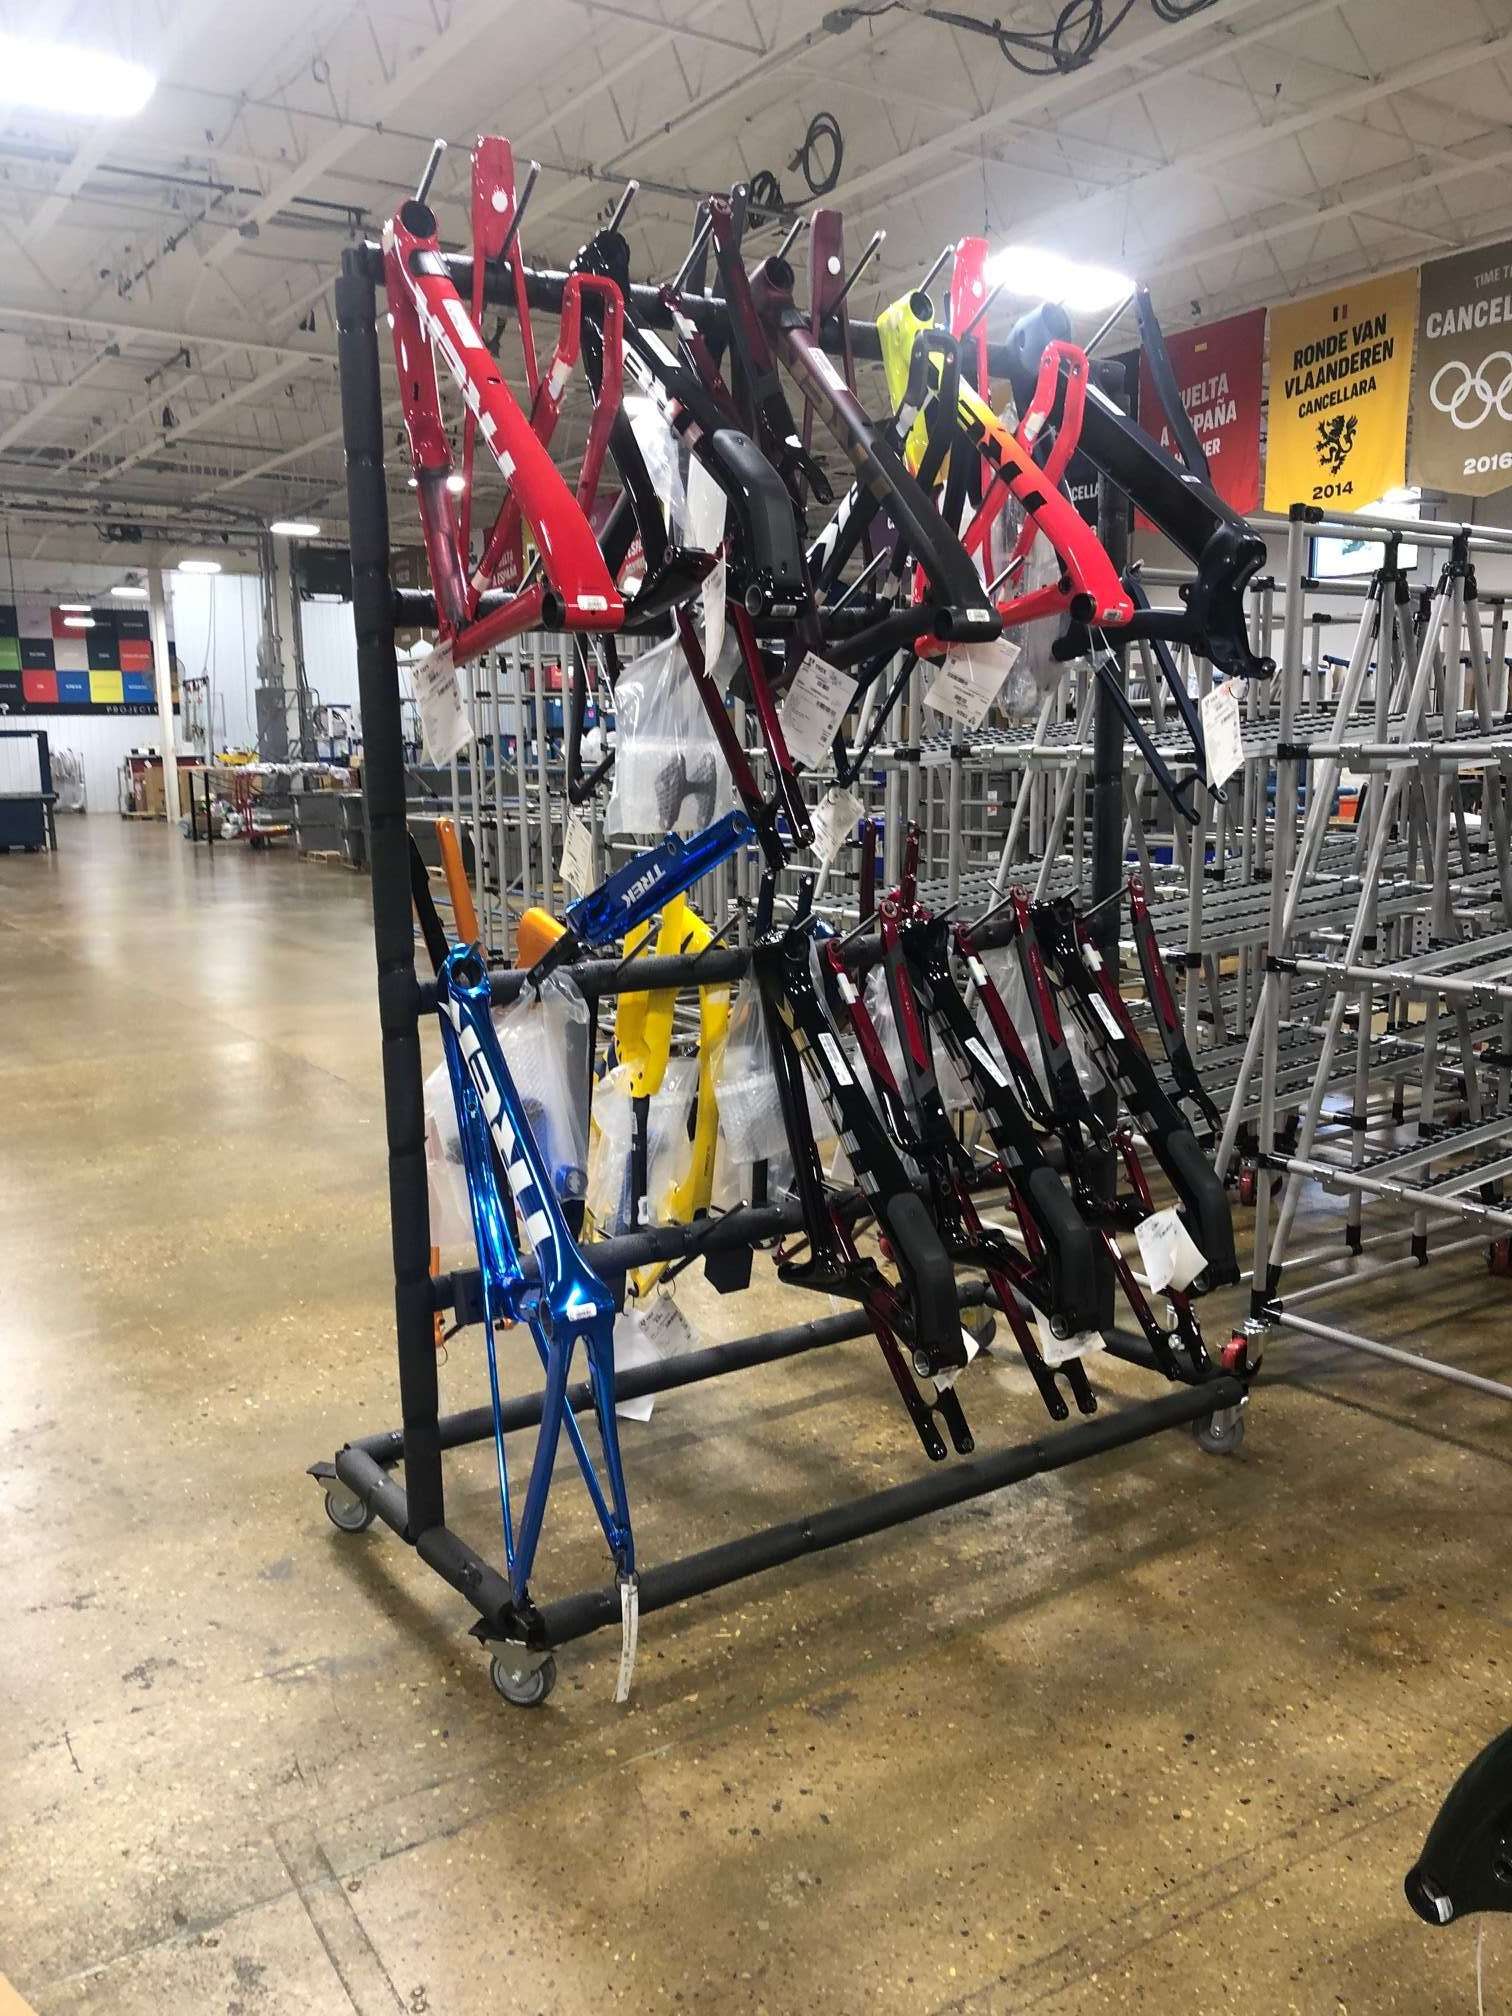 Rack holding 15 bike frames waiting to be assembled